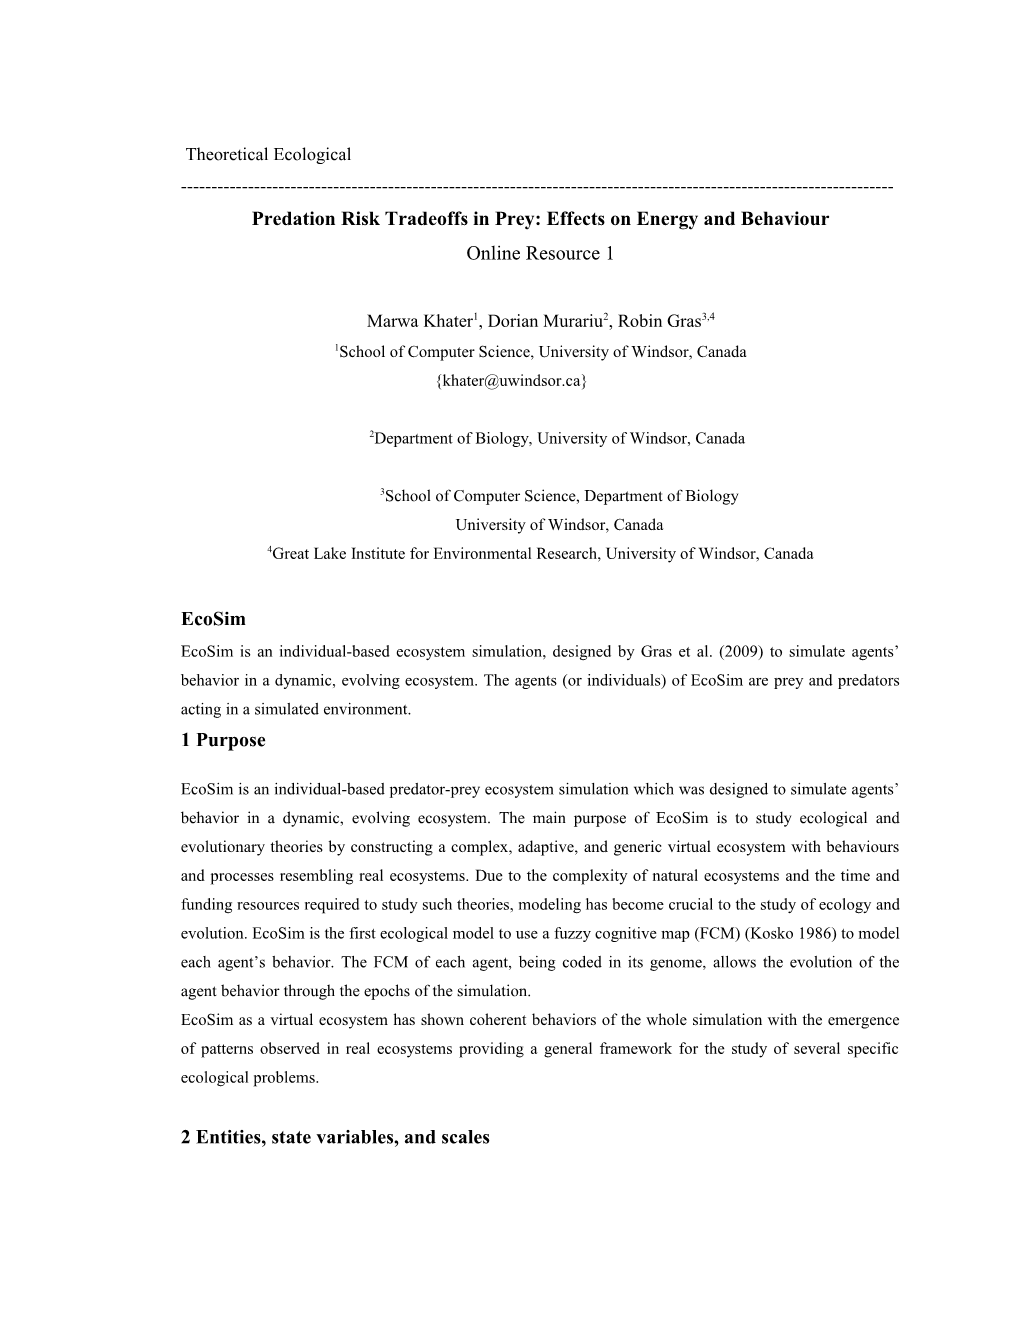 Predation Risk Tradeoffs in Prey: Effects on Energy and Behaviour